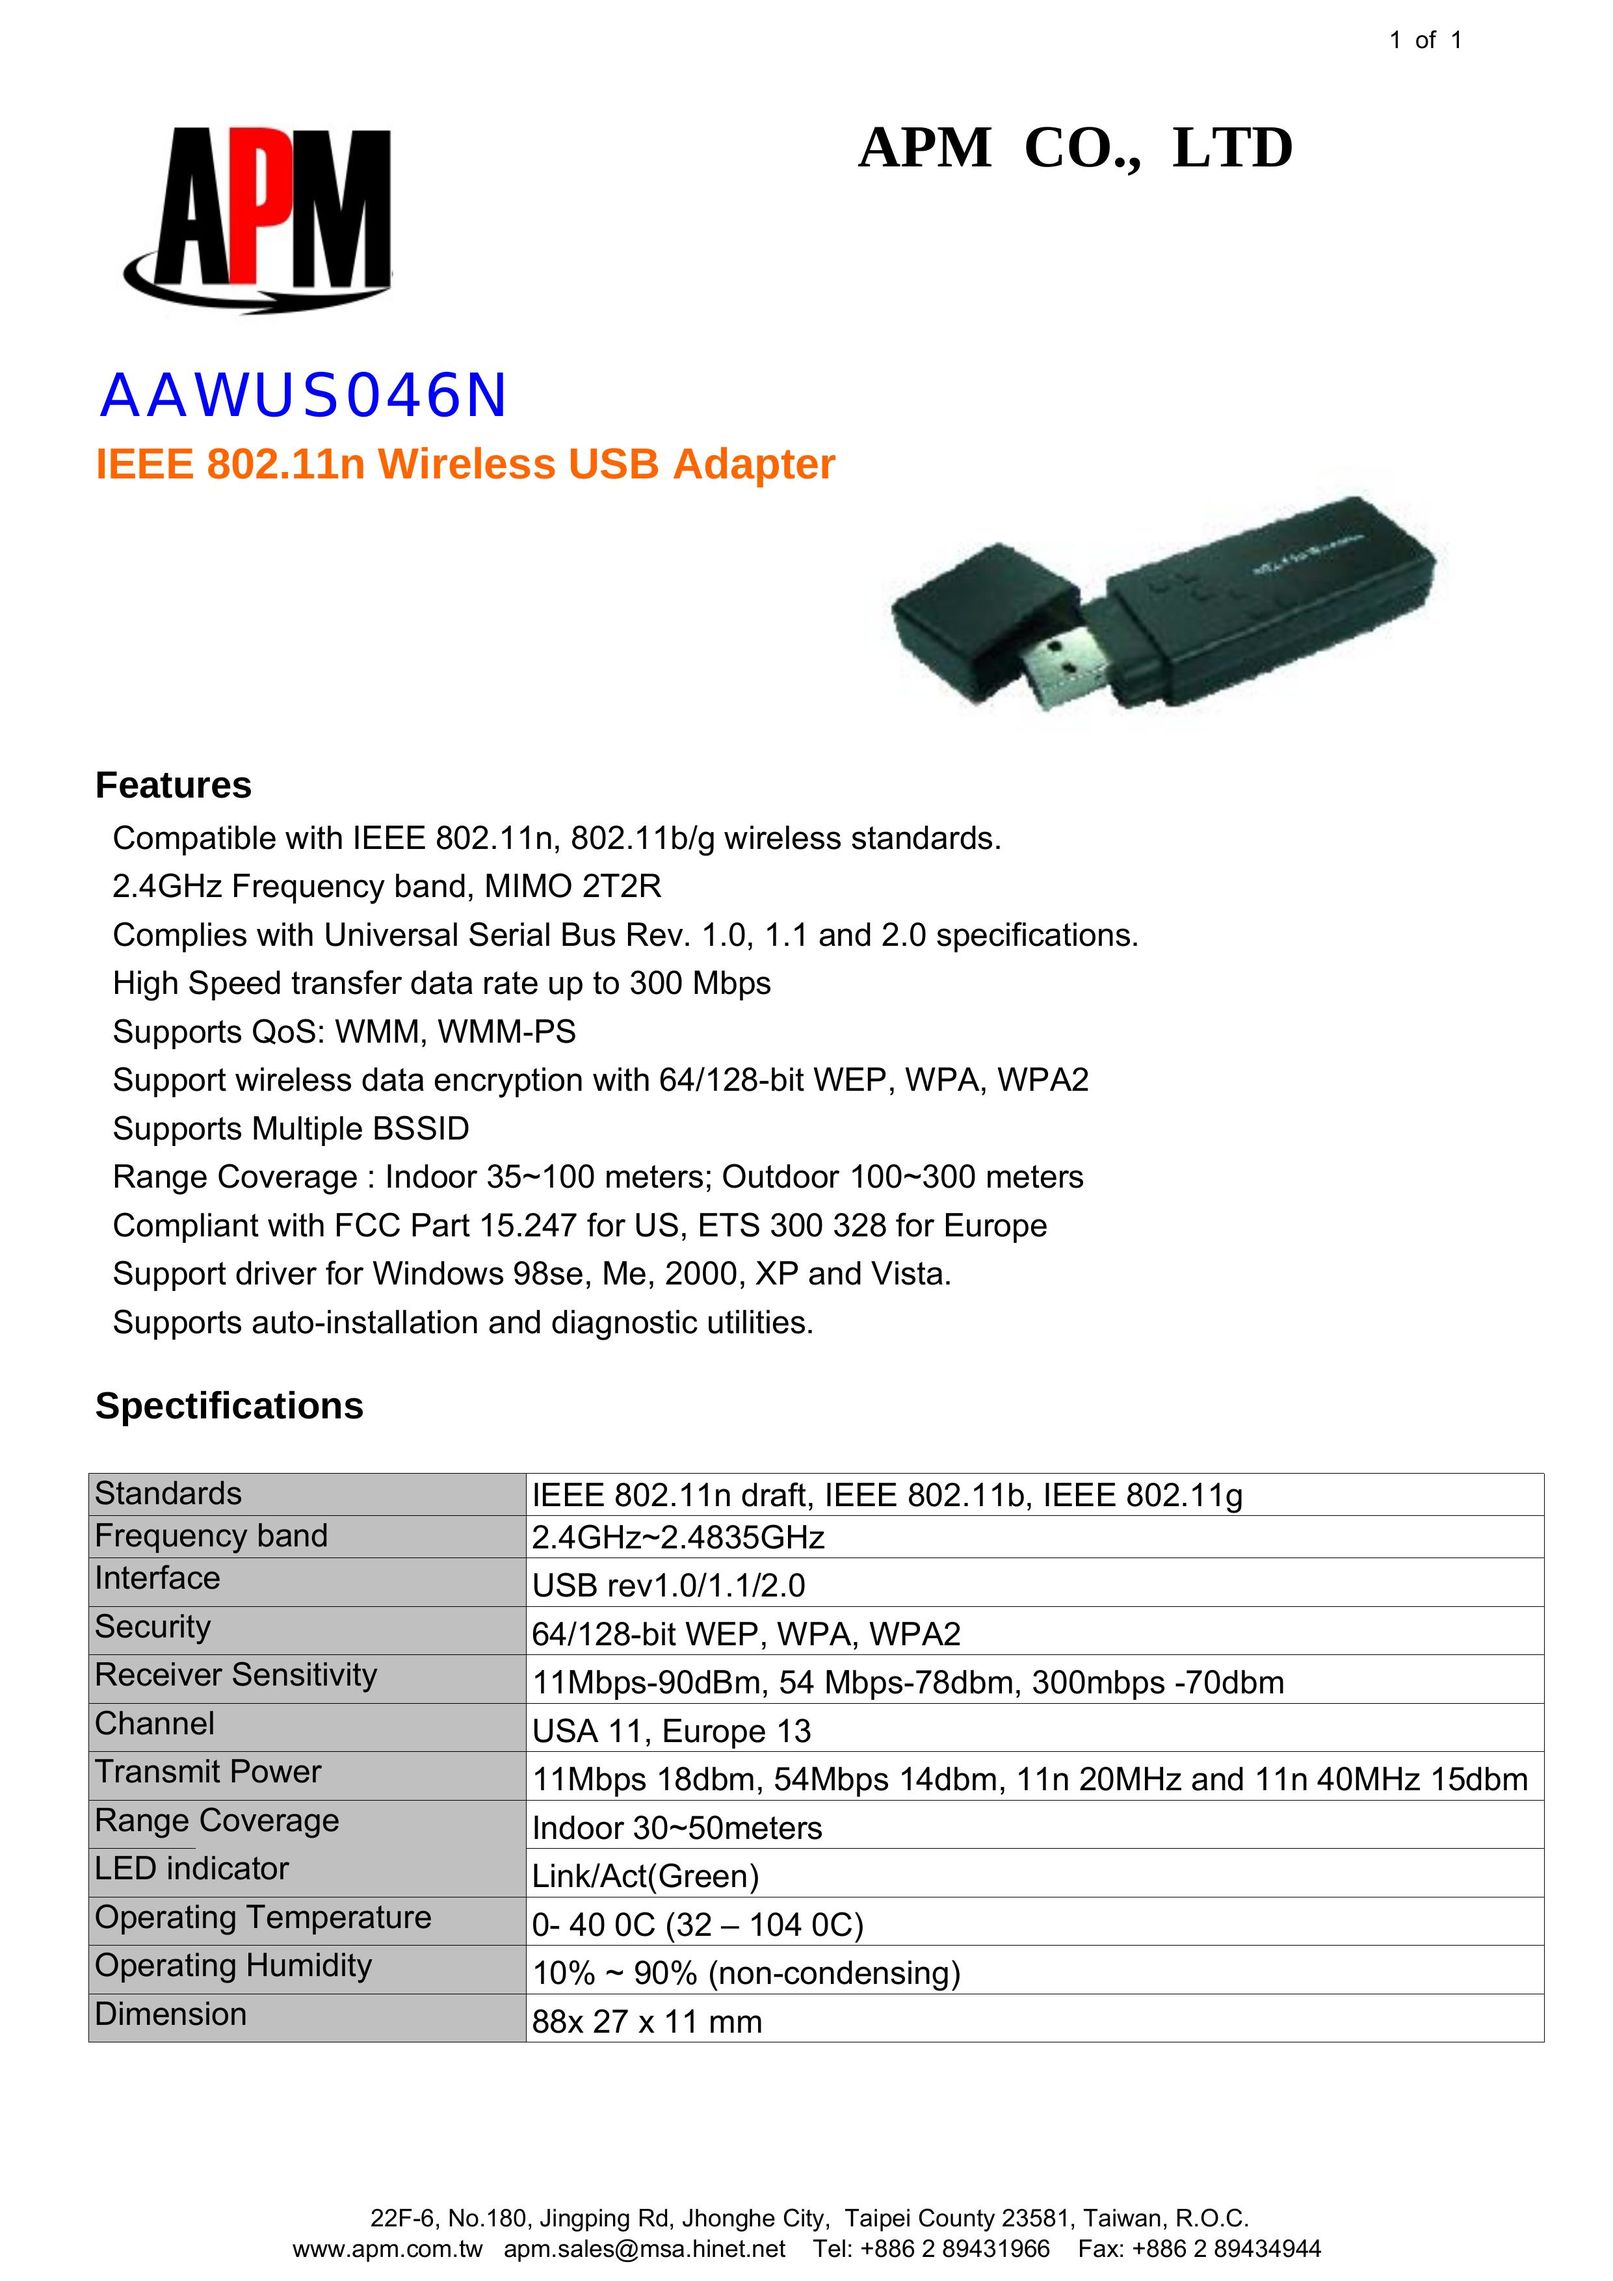 APM AAWUS046N Network Card User Manual